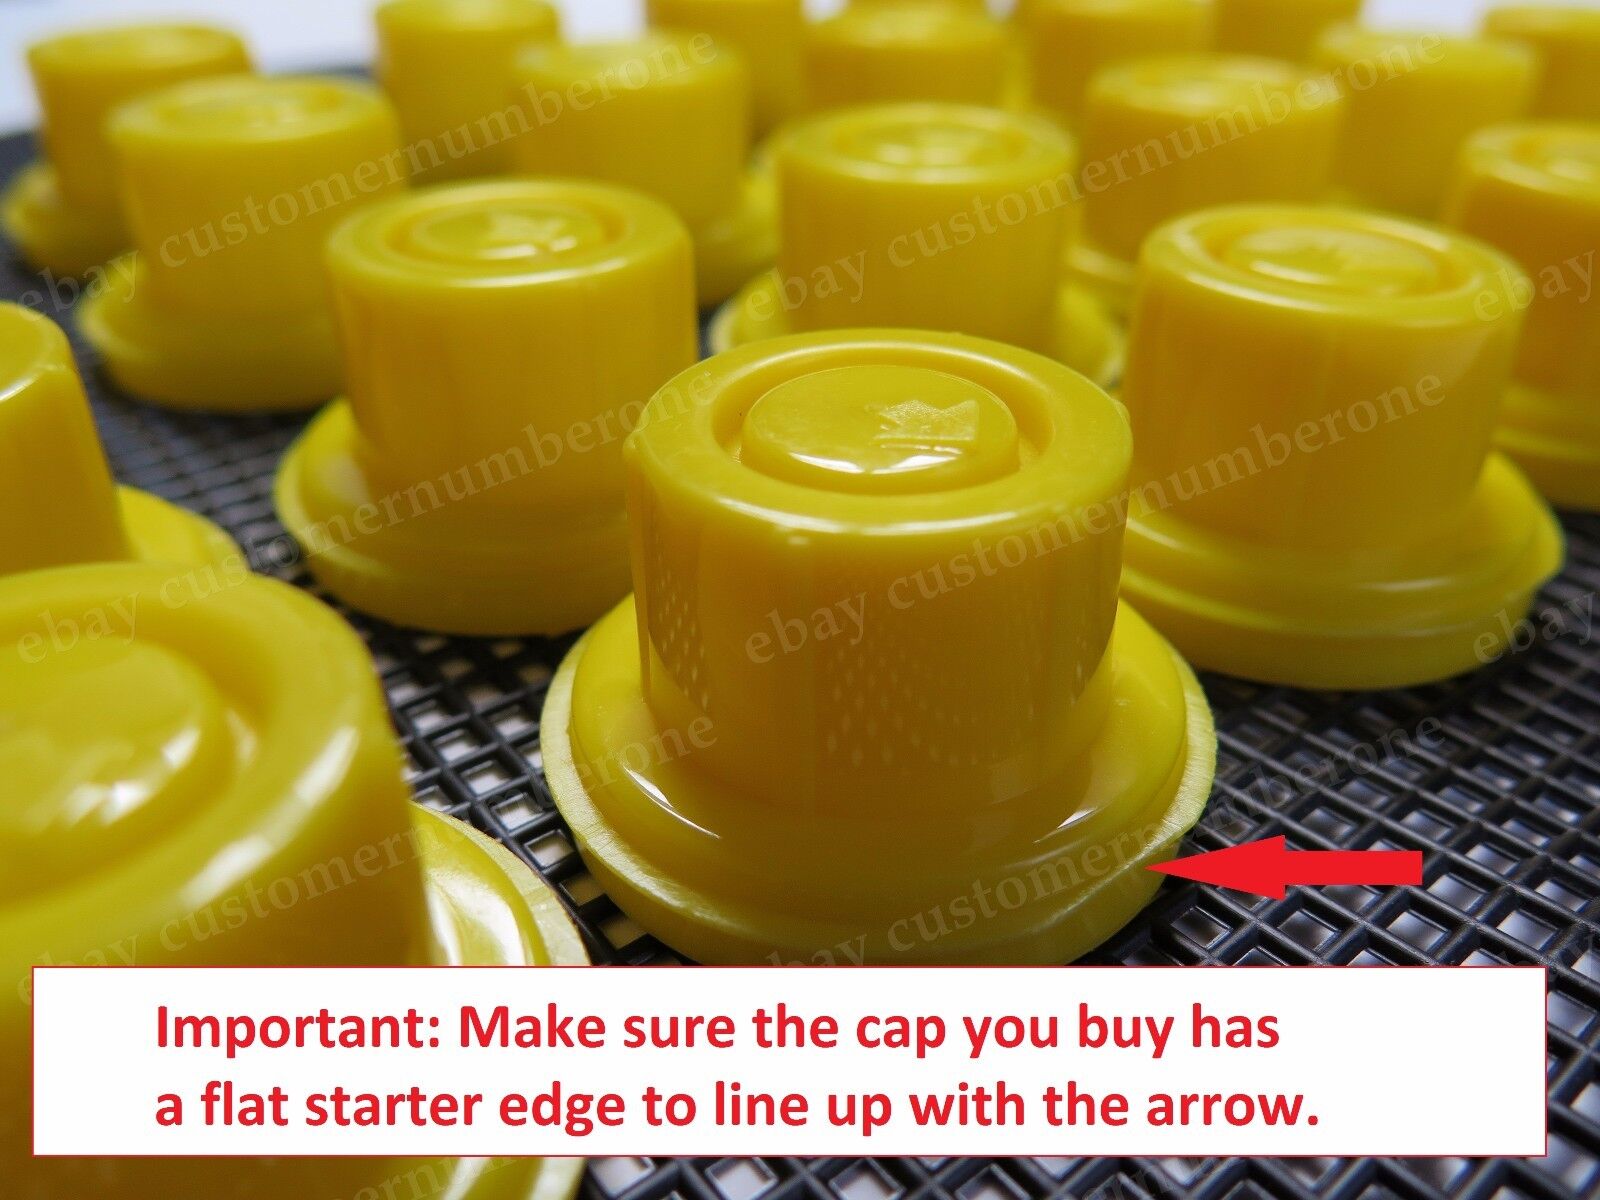 25 Blitz Gas Can Yellow Spout Caps fits part 900302 900092 900094 Original Style Aftermarket cno50 - фотография #7